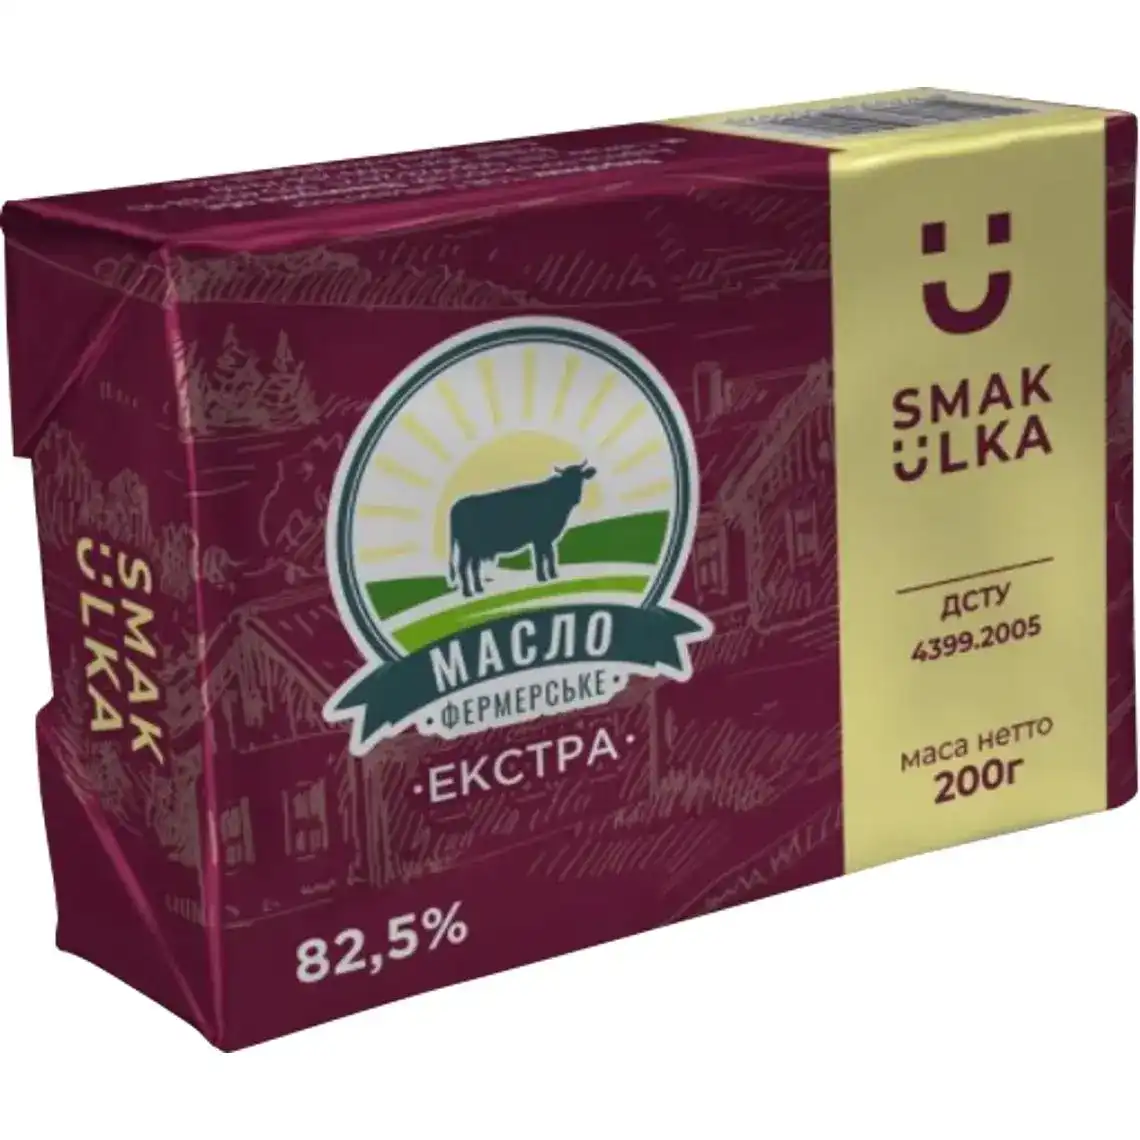 Масло Smakulka солодковершкове екстра 82% 200г